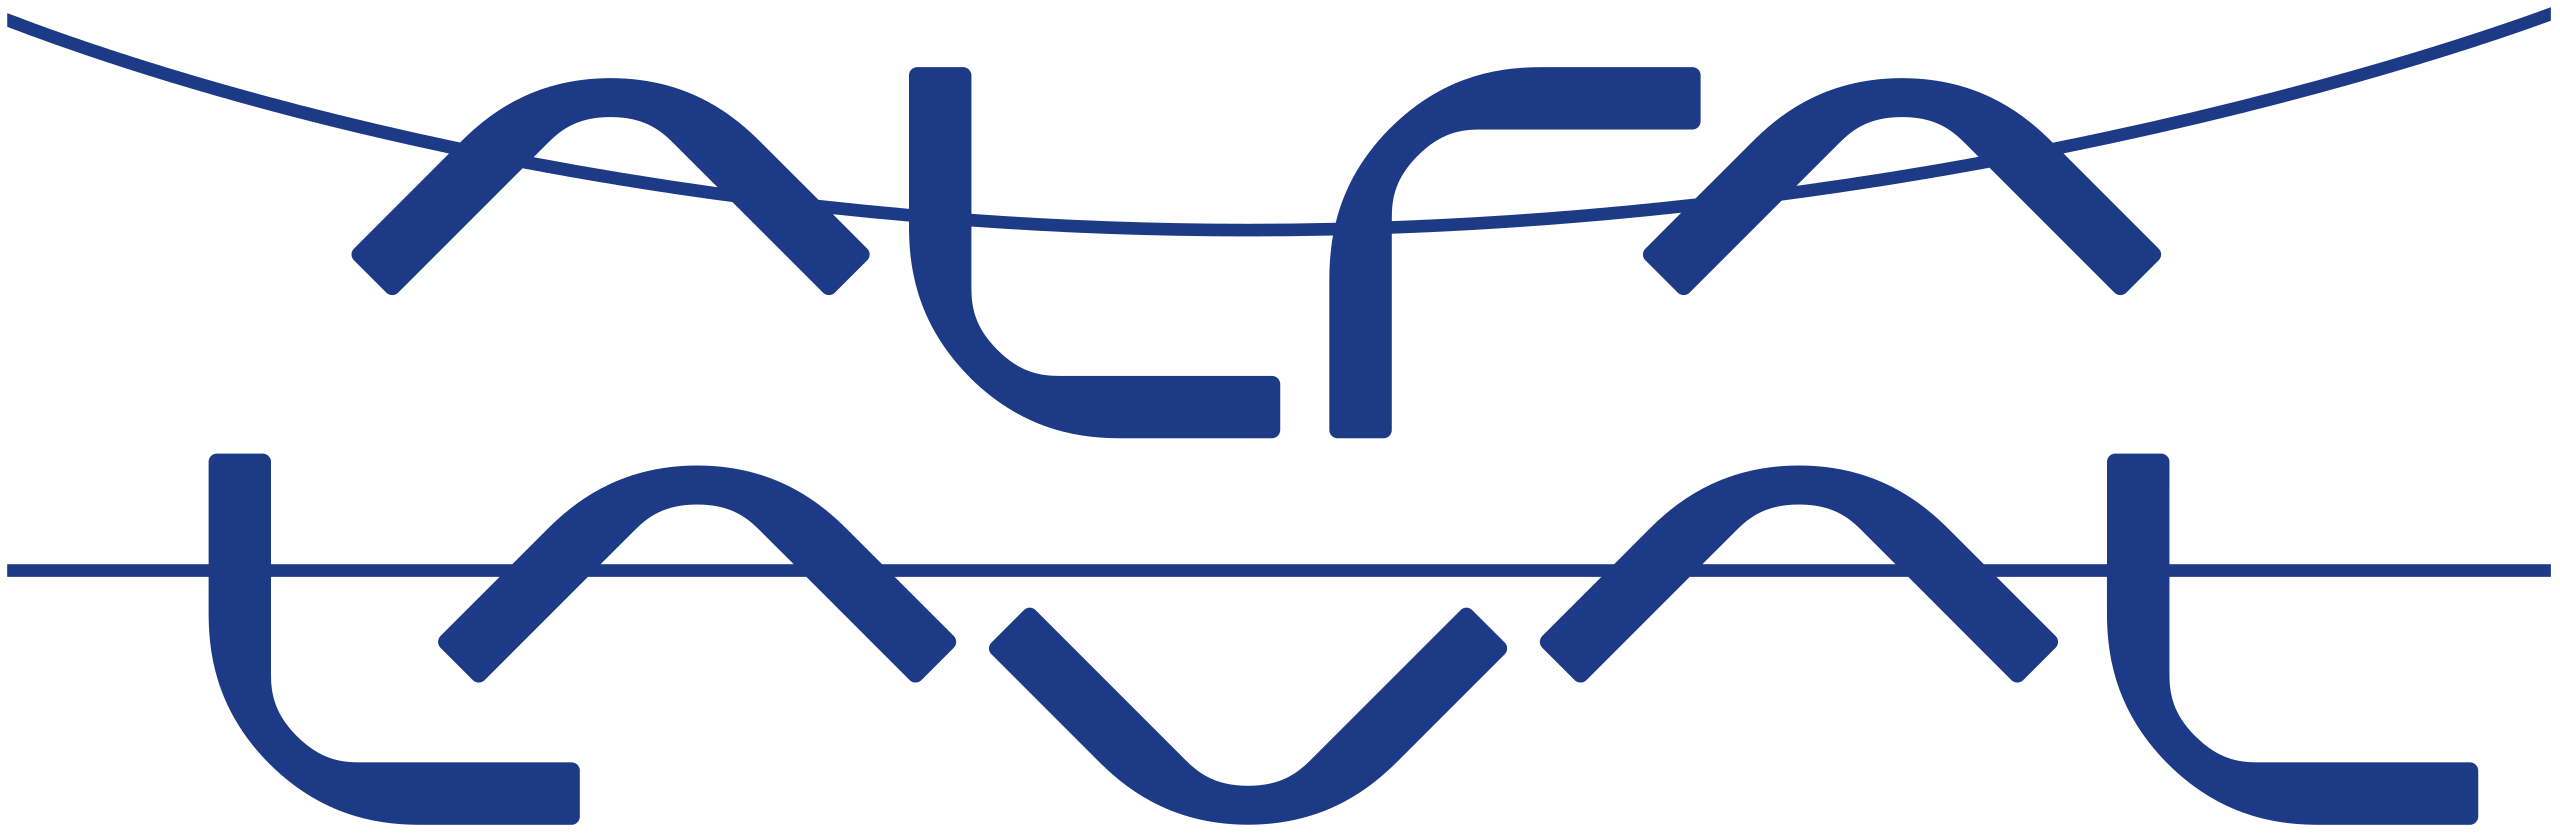 Alpha Laval logo